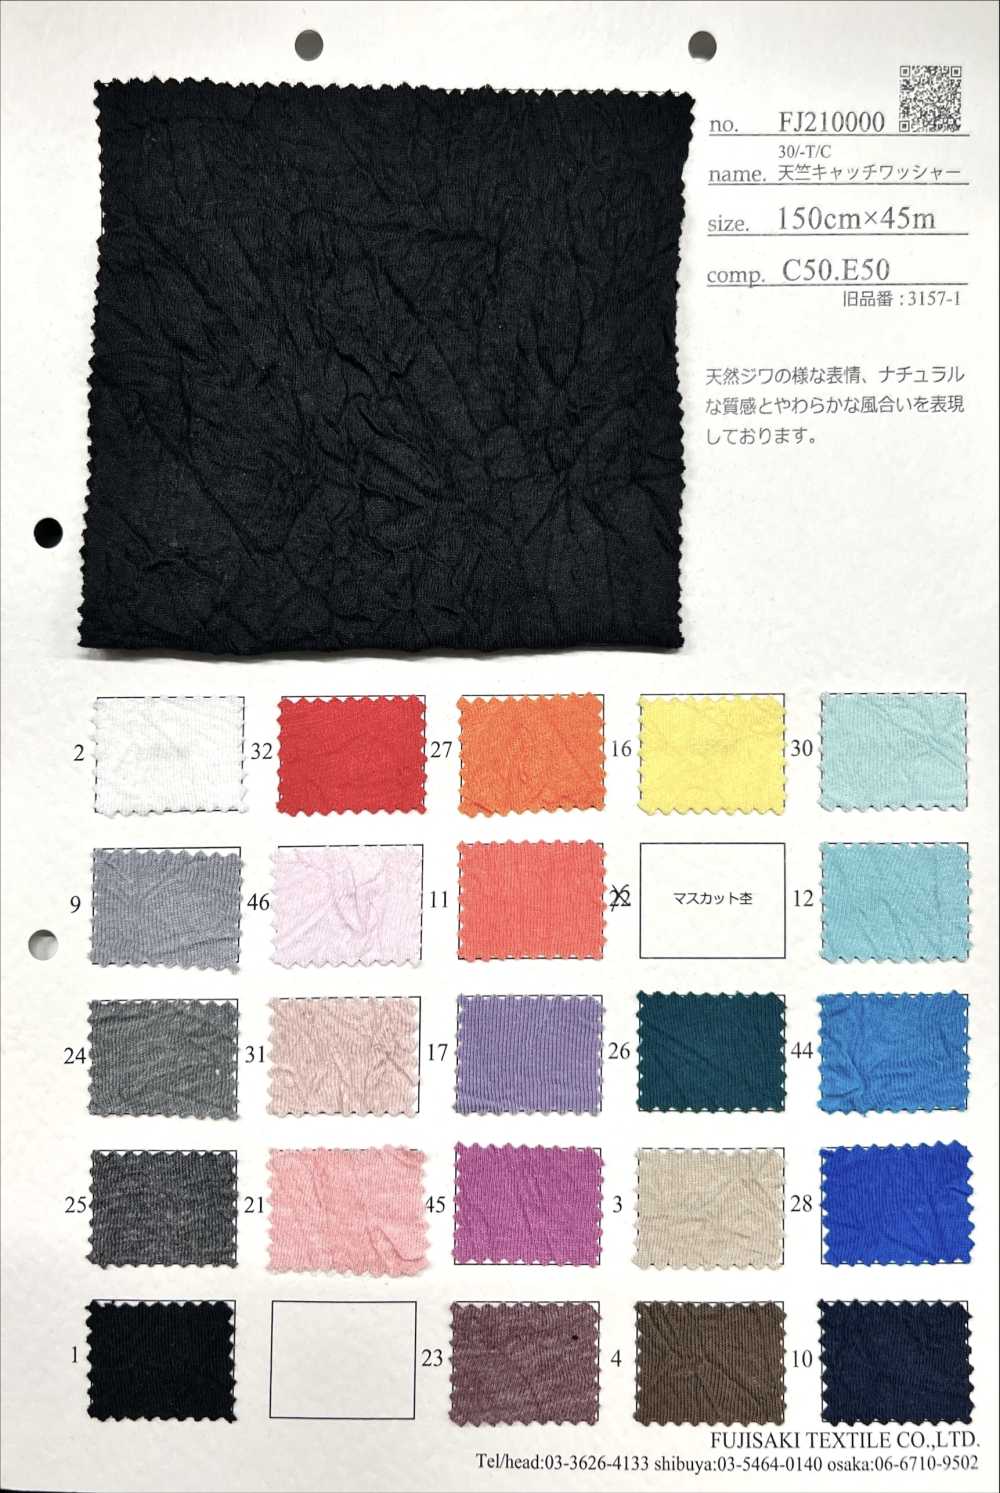 FJ210000 30/-T/C Jersey Catch Washer Verarbeitung[Textilgewebe] Fujisaki Textile